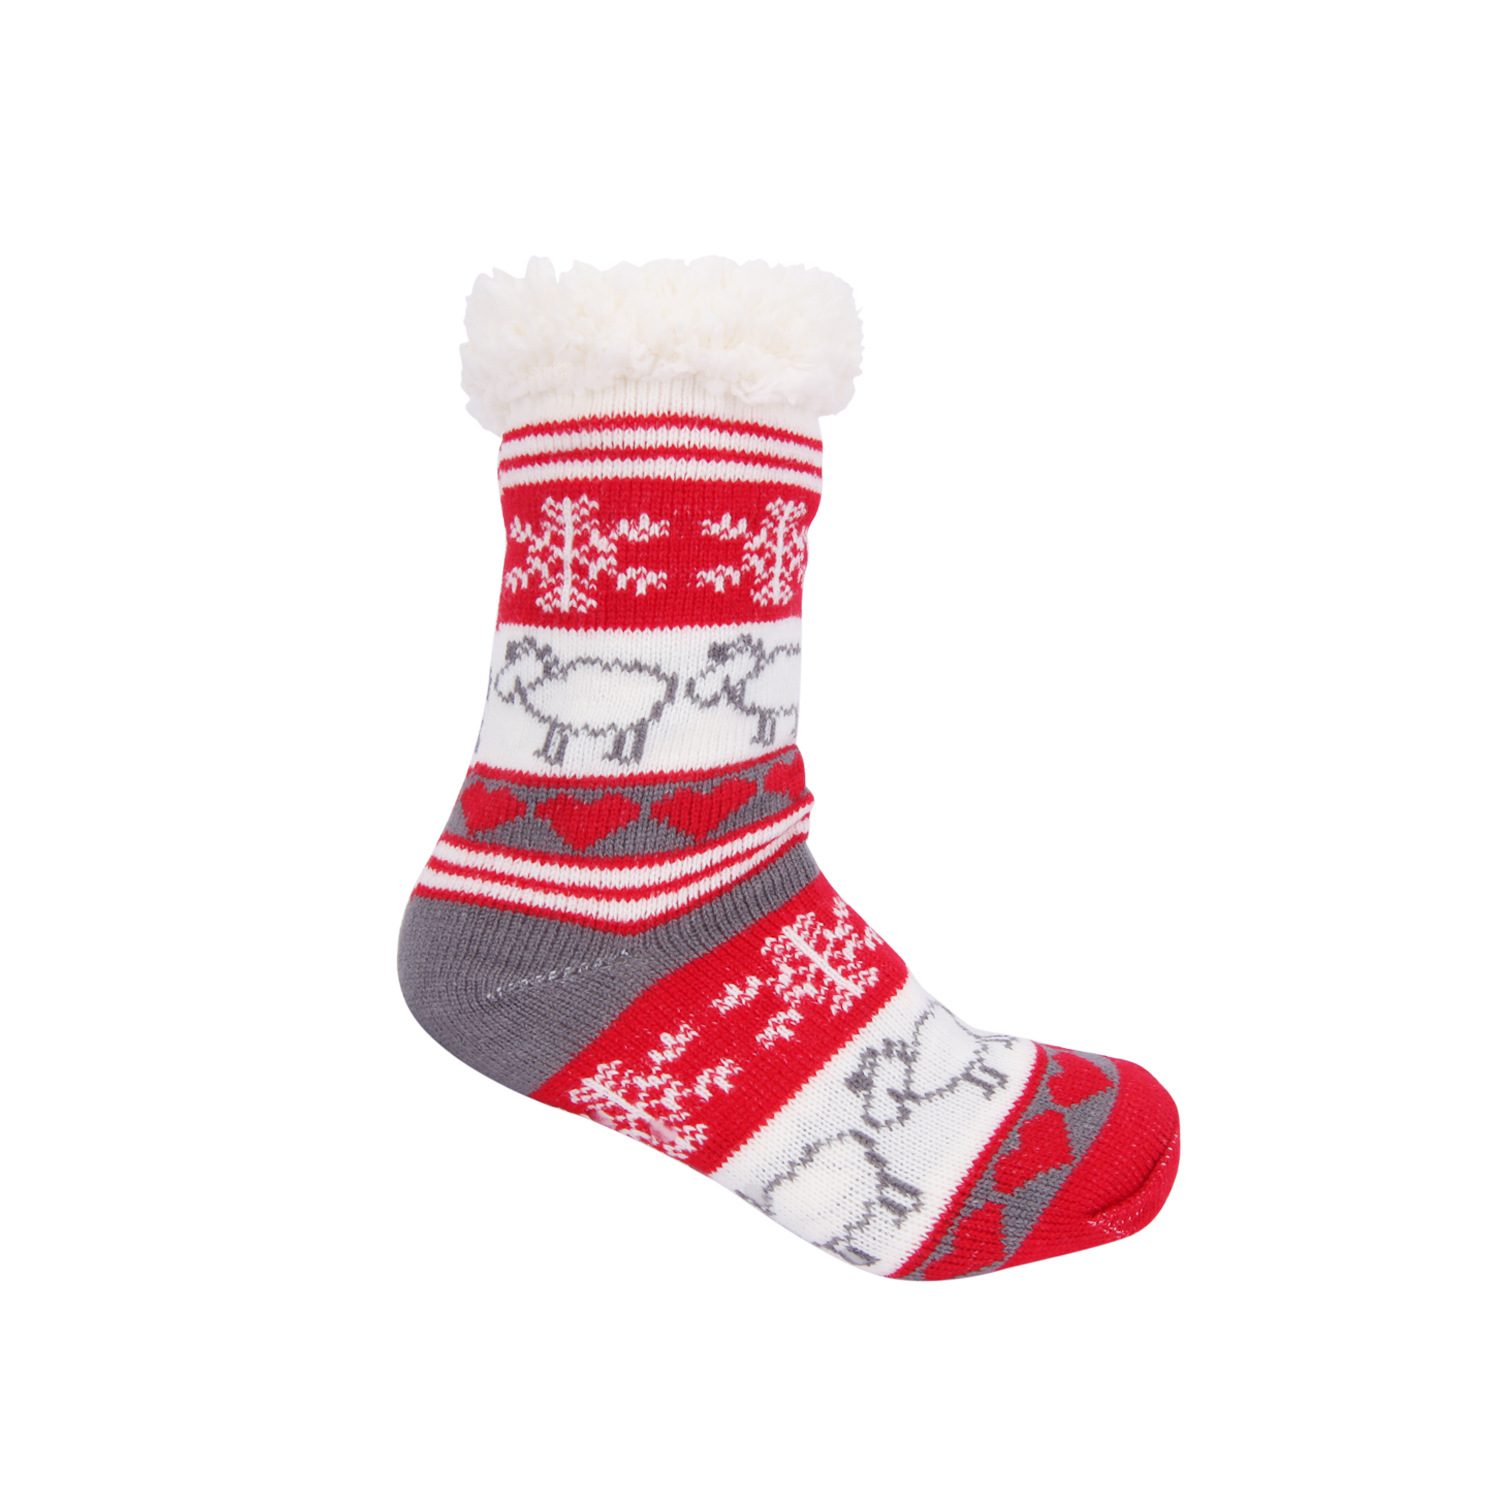 Cheapest Factory Plantar Fasciitis Compression Socks - Fancy Christmas Socks Printed Fun Colorful Festive, Crew Knee Cozy Socks Holiday Design Soft Slipper Socks Reindeer Home floor Socks Winter W...